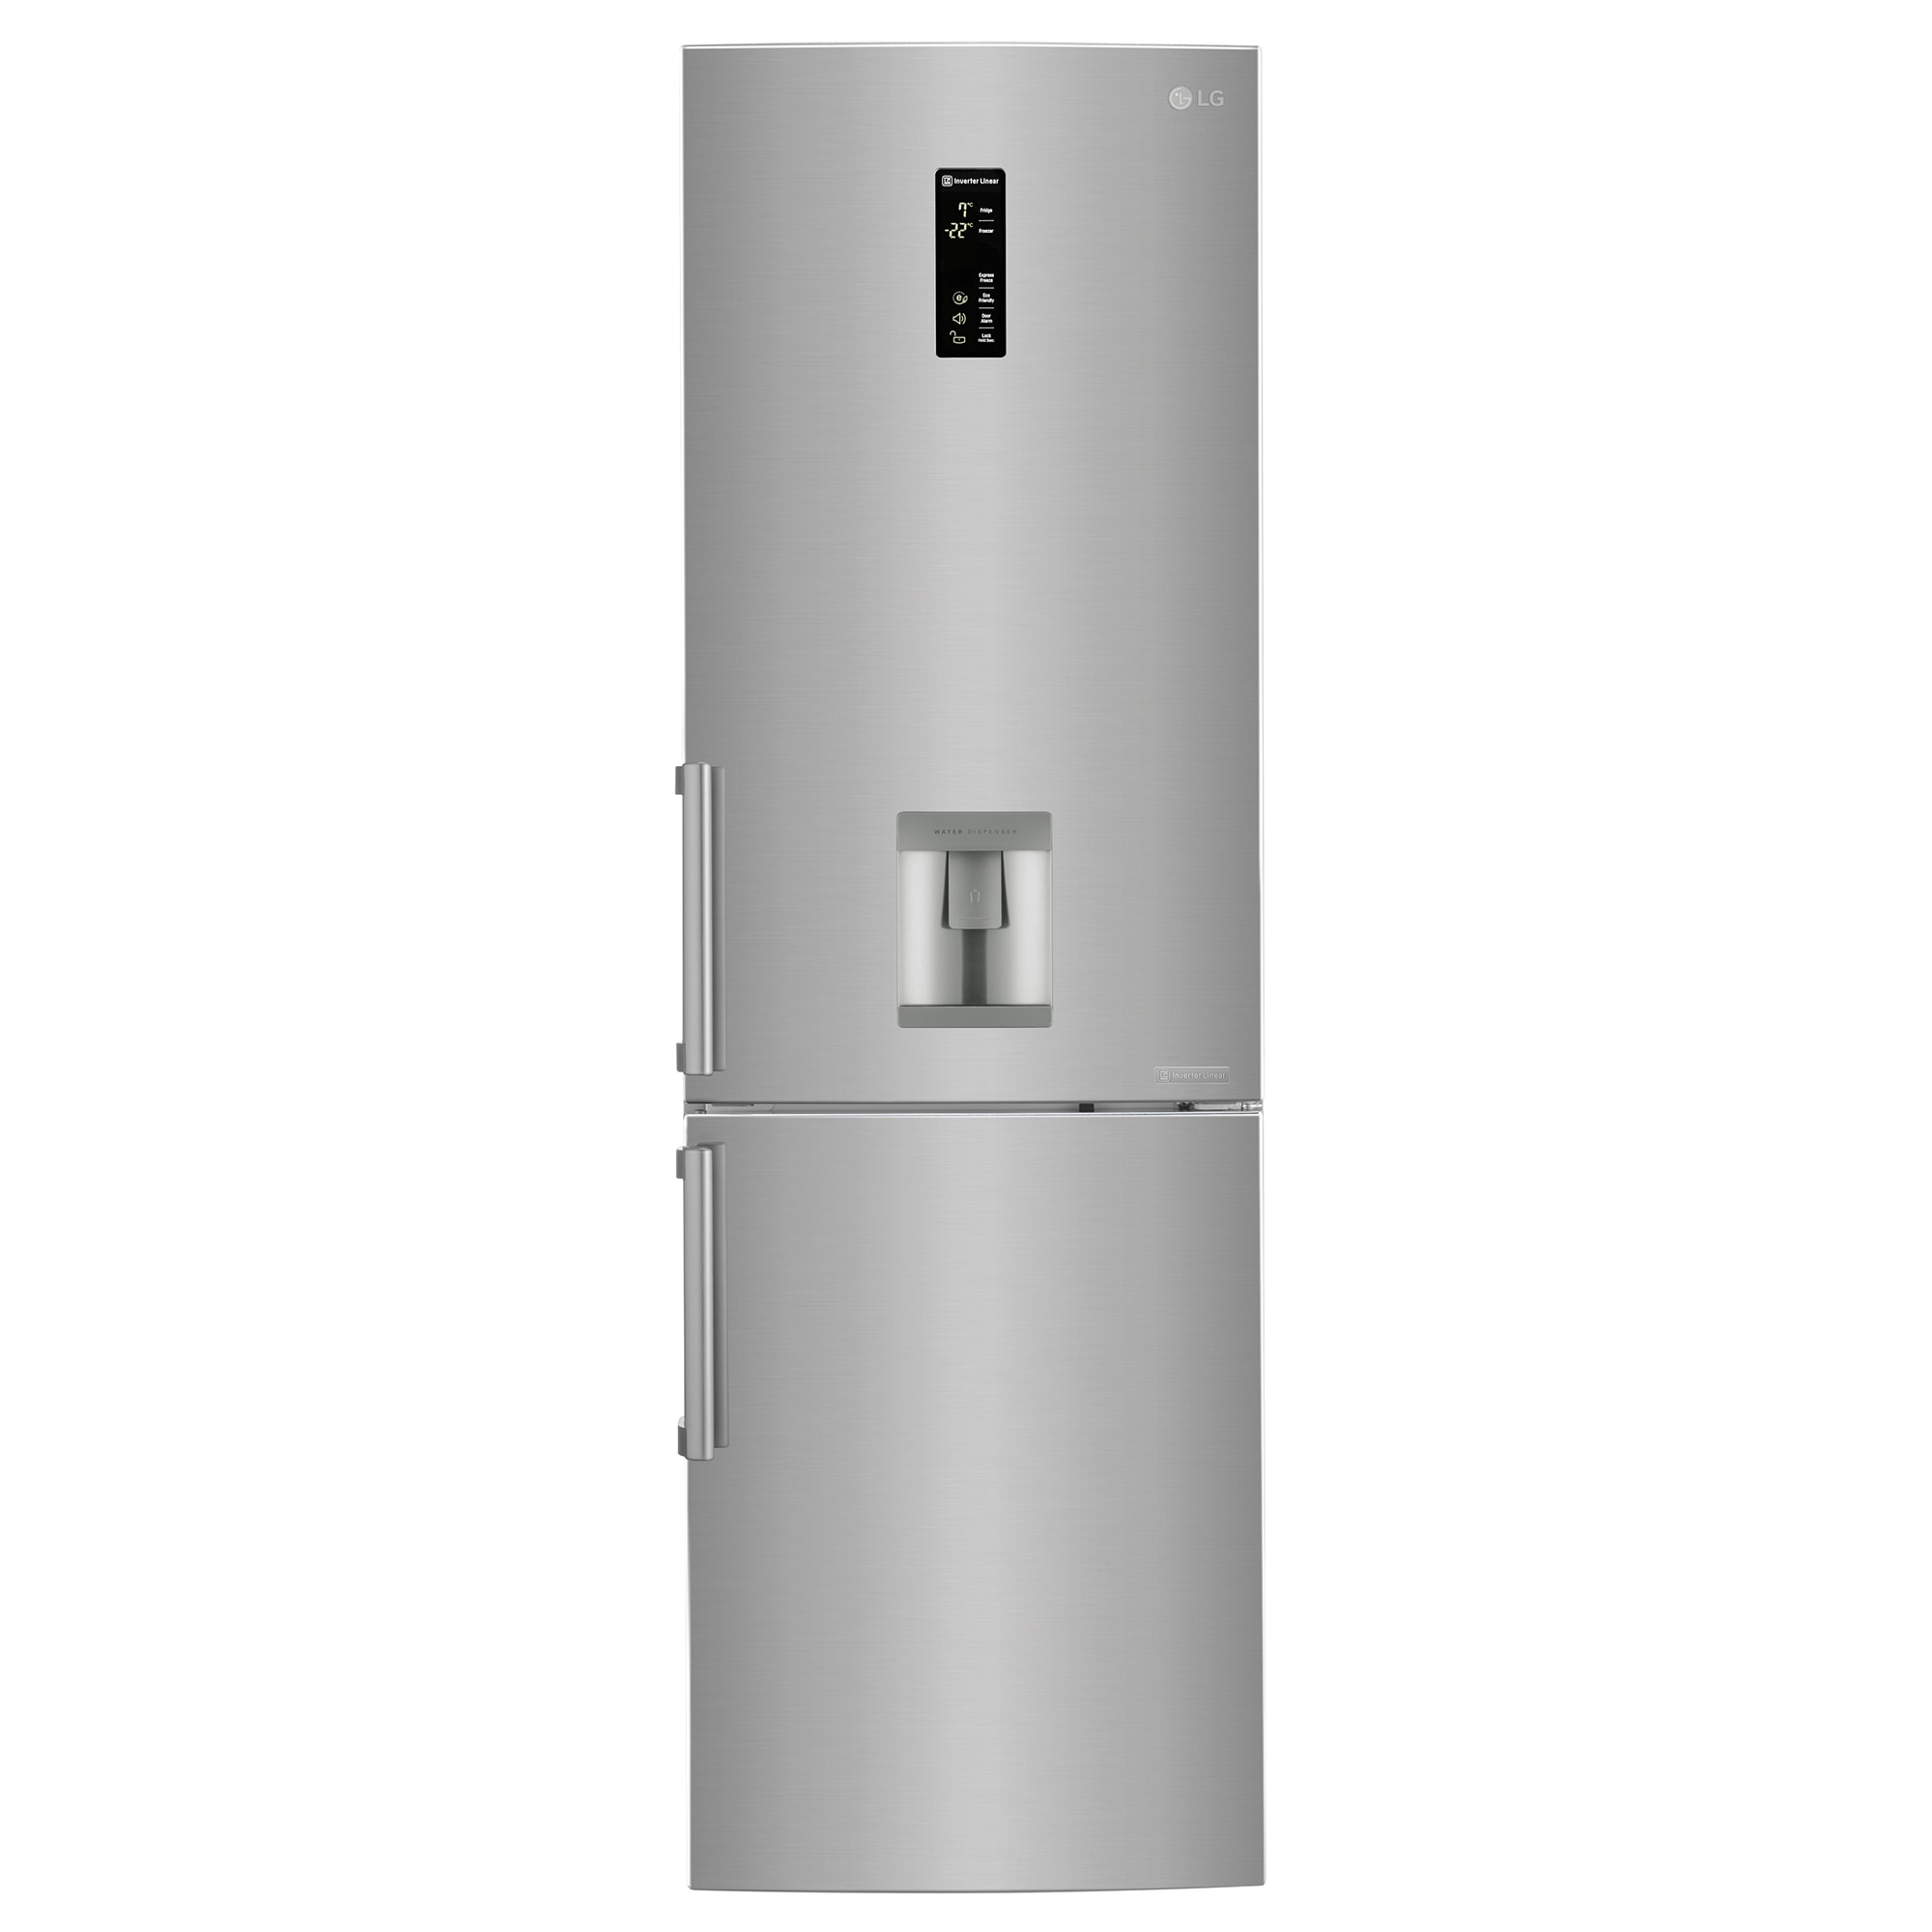 Хладилник LG GBF59PZDZB с обем от 314 л.